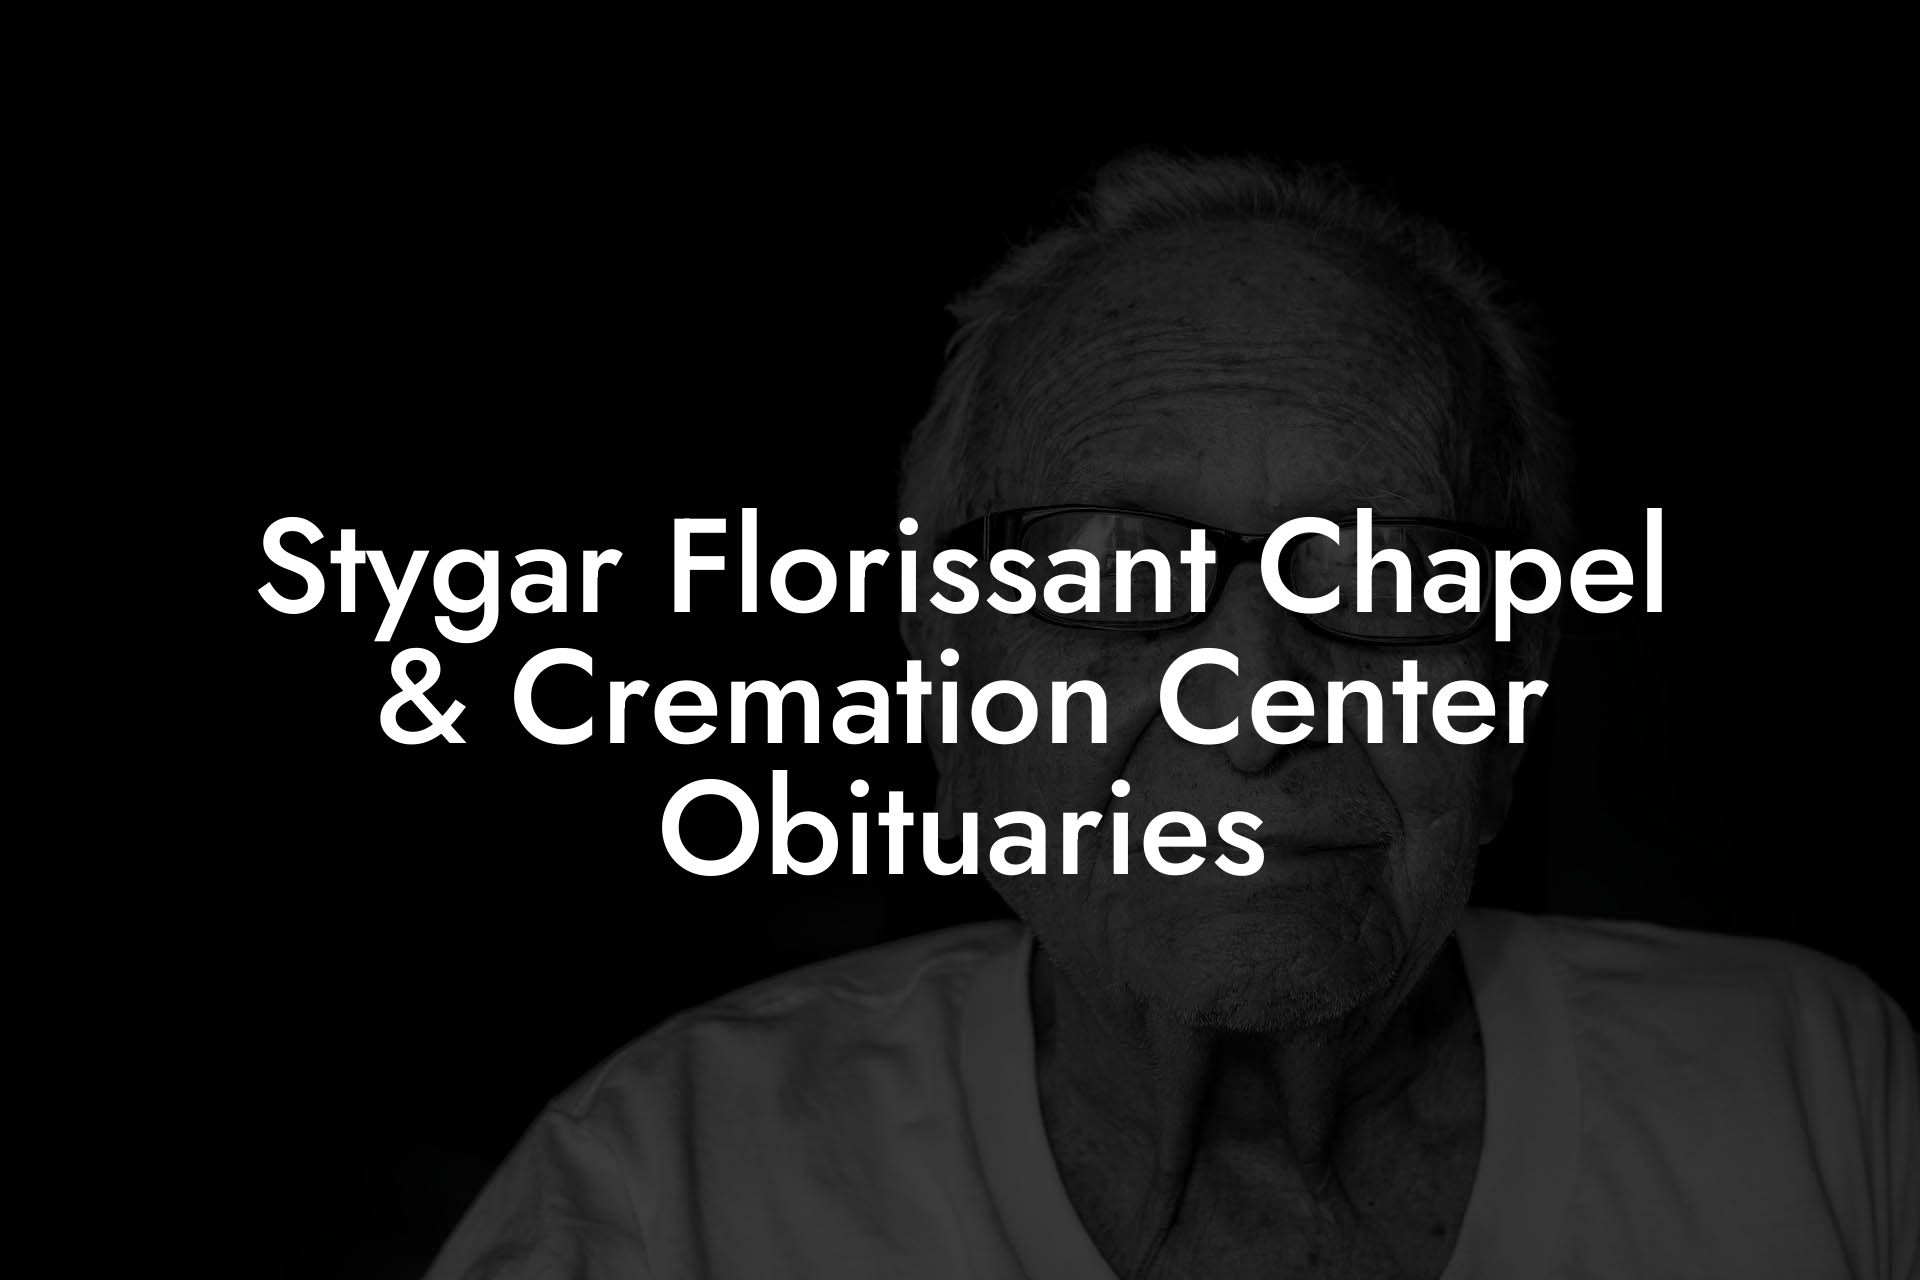 Stygar Florissant Chapel & Cremation Center Obituaries